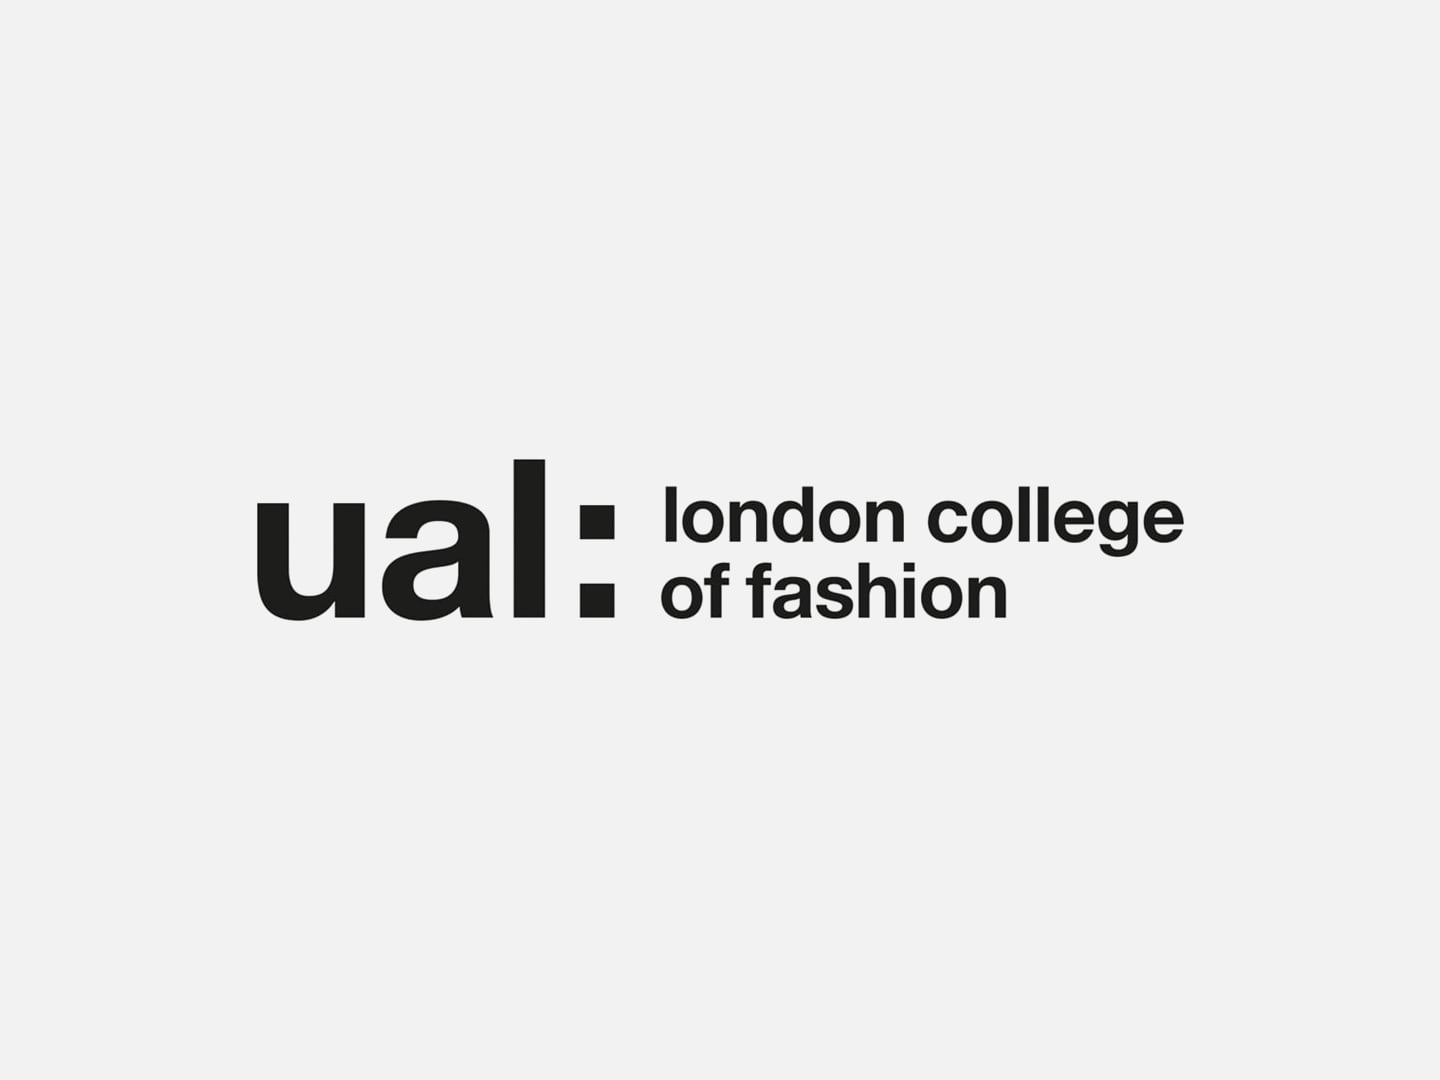 ual london college of fashion